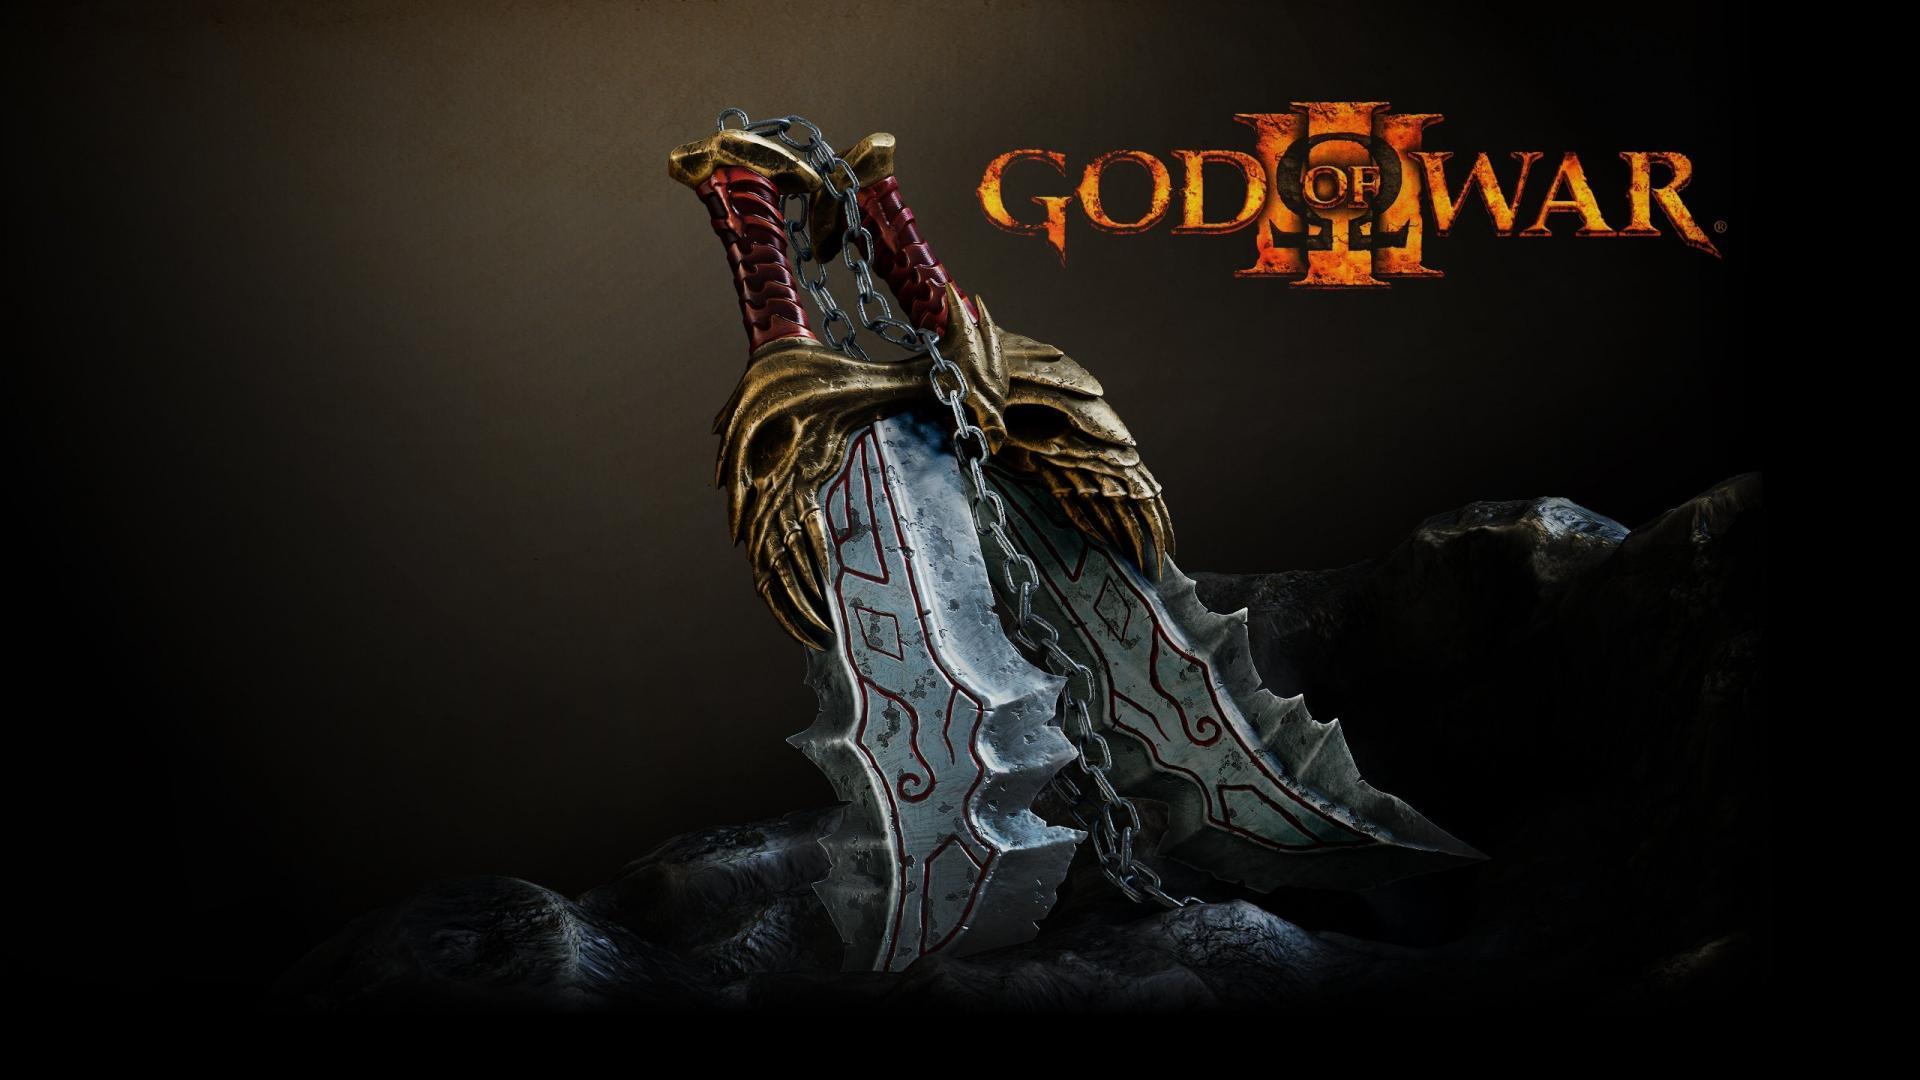 God Of War Logo Wallpapers Top Free God Of War Logo Backgrounds